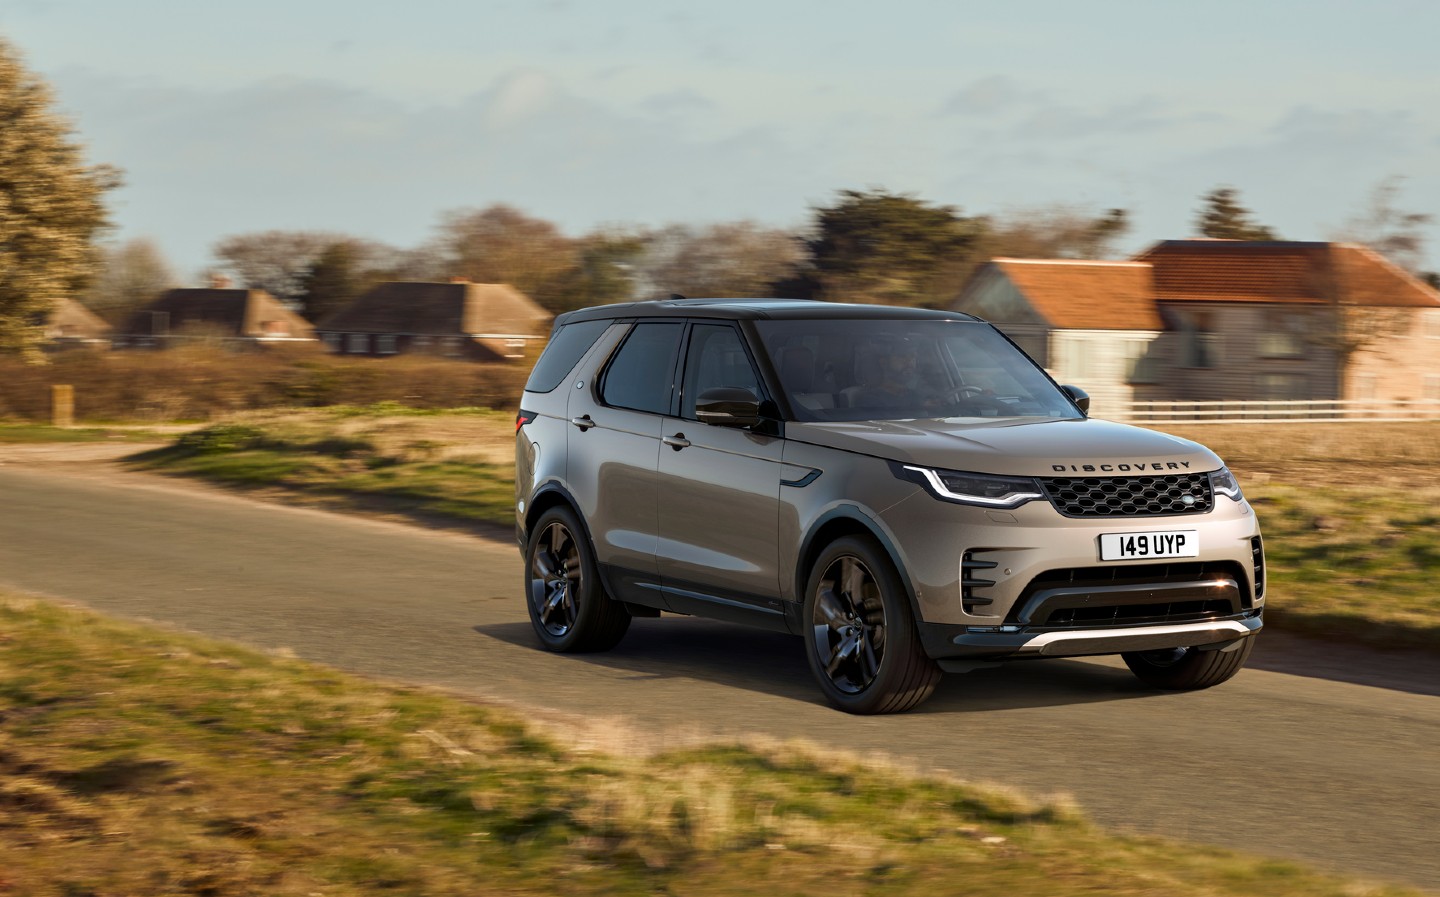 New Land Rover Discovery gets design evolution, tech revolution